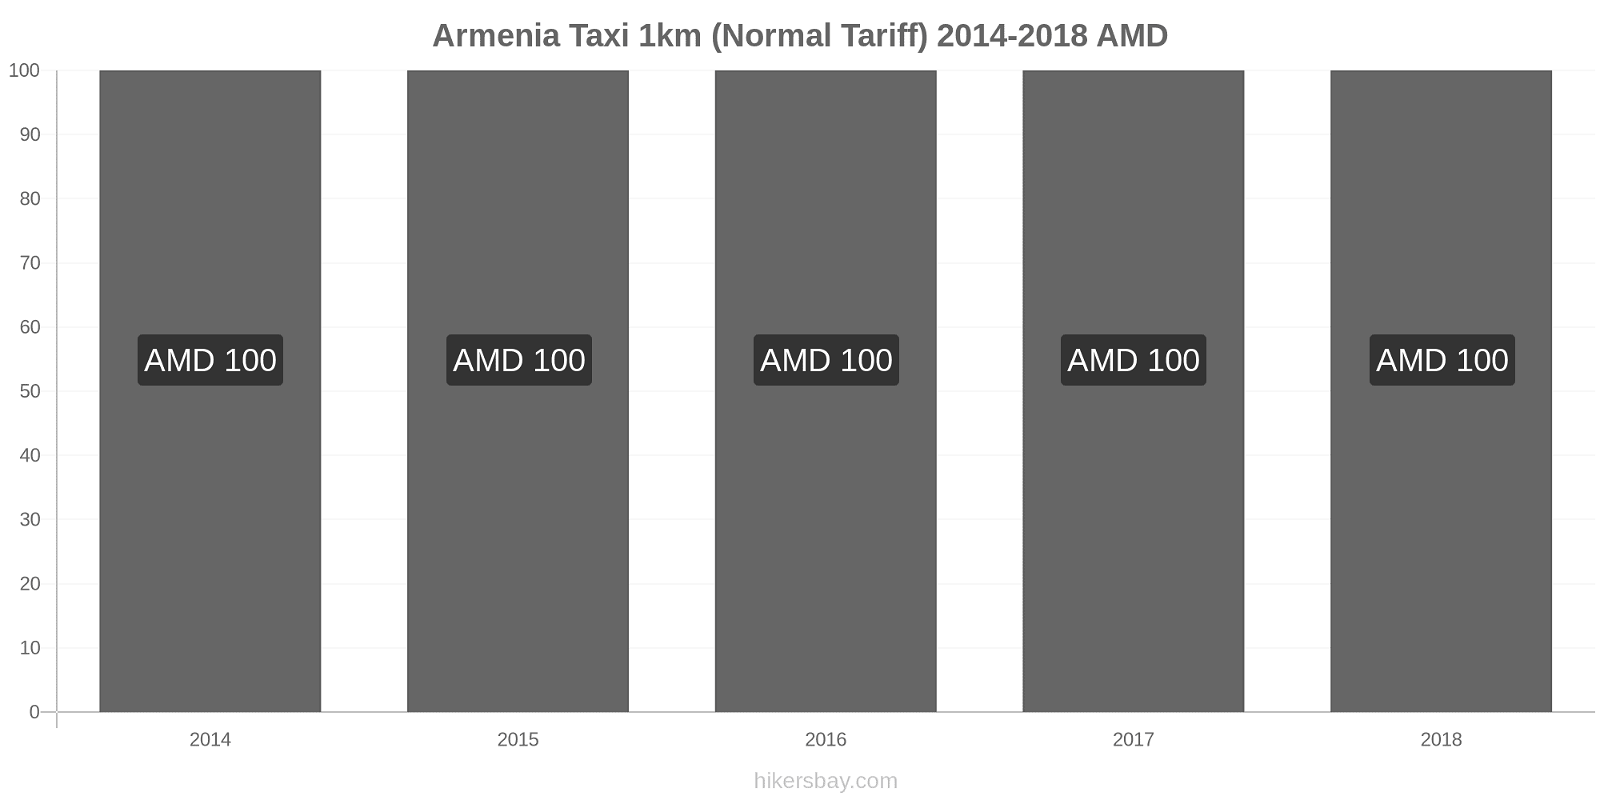 Armenia price changes Taxi 1km (Normal Tariff) hikersbay.com